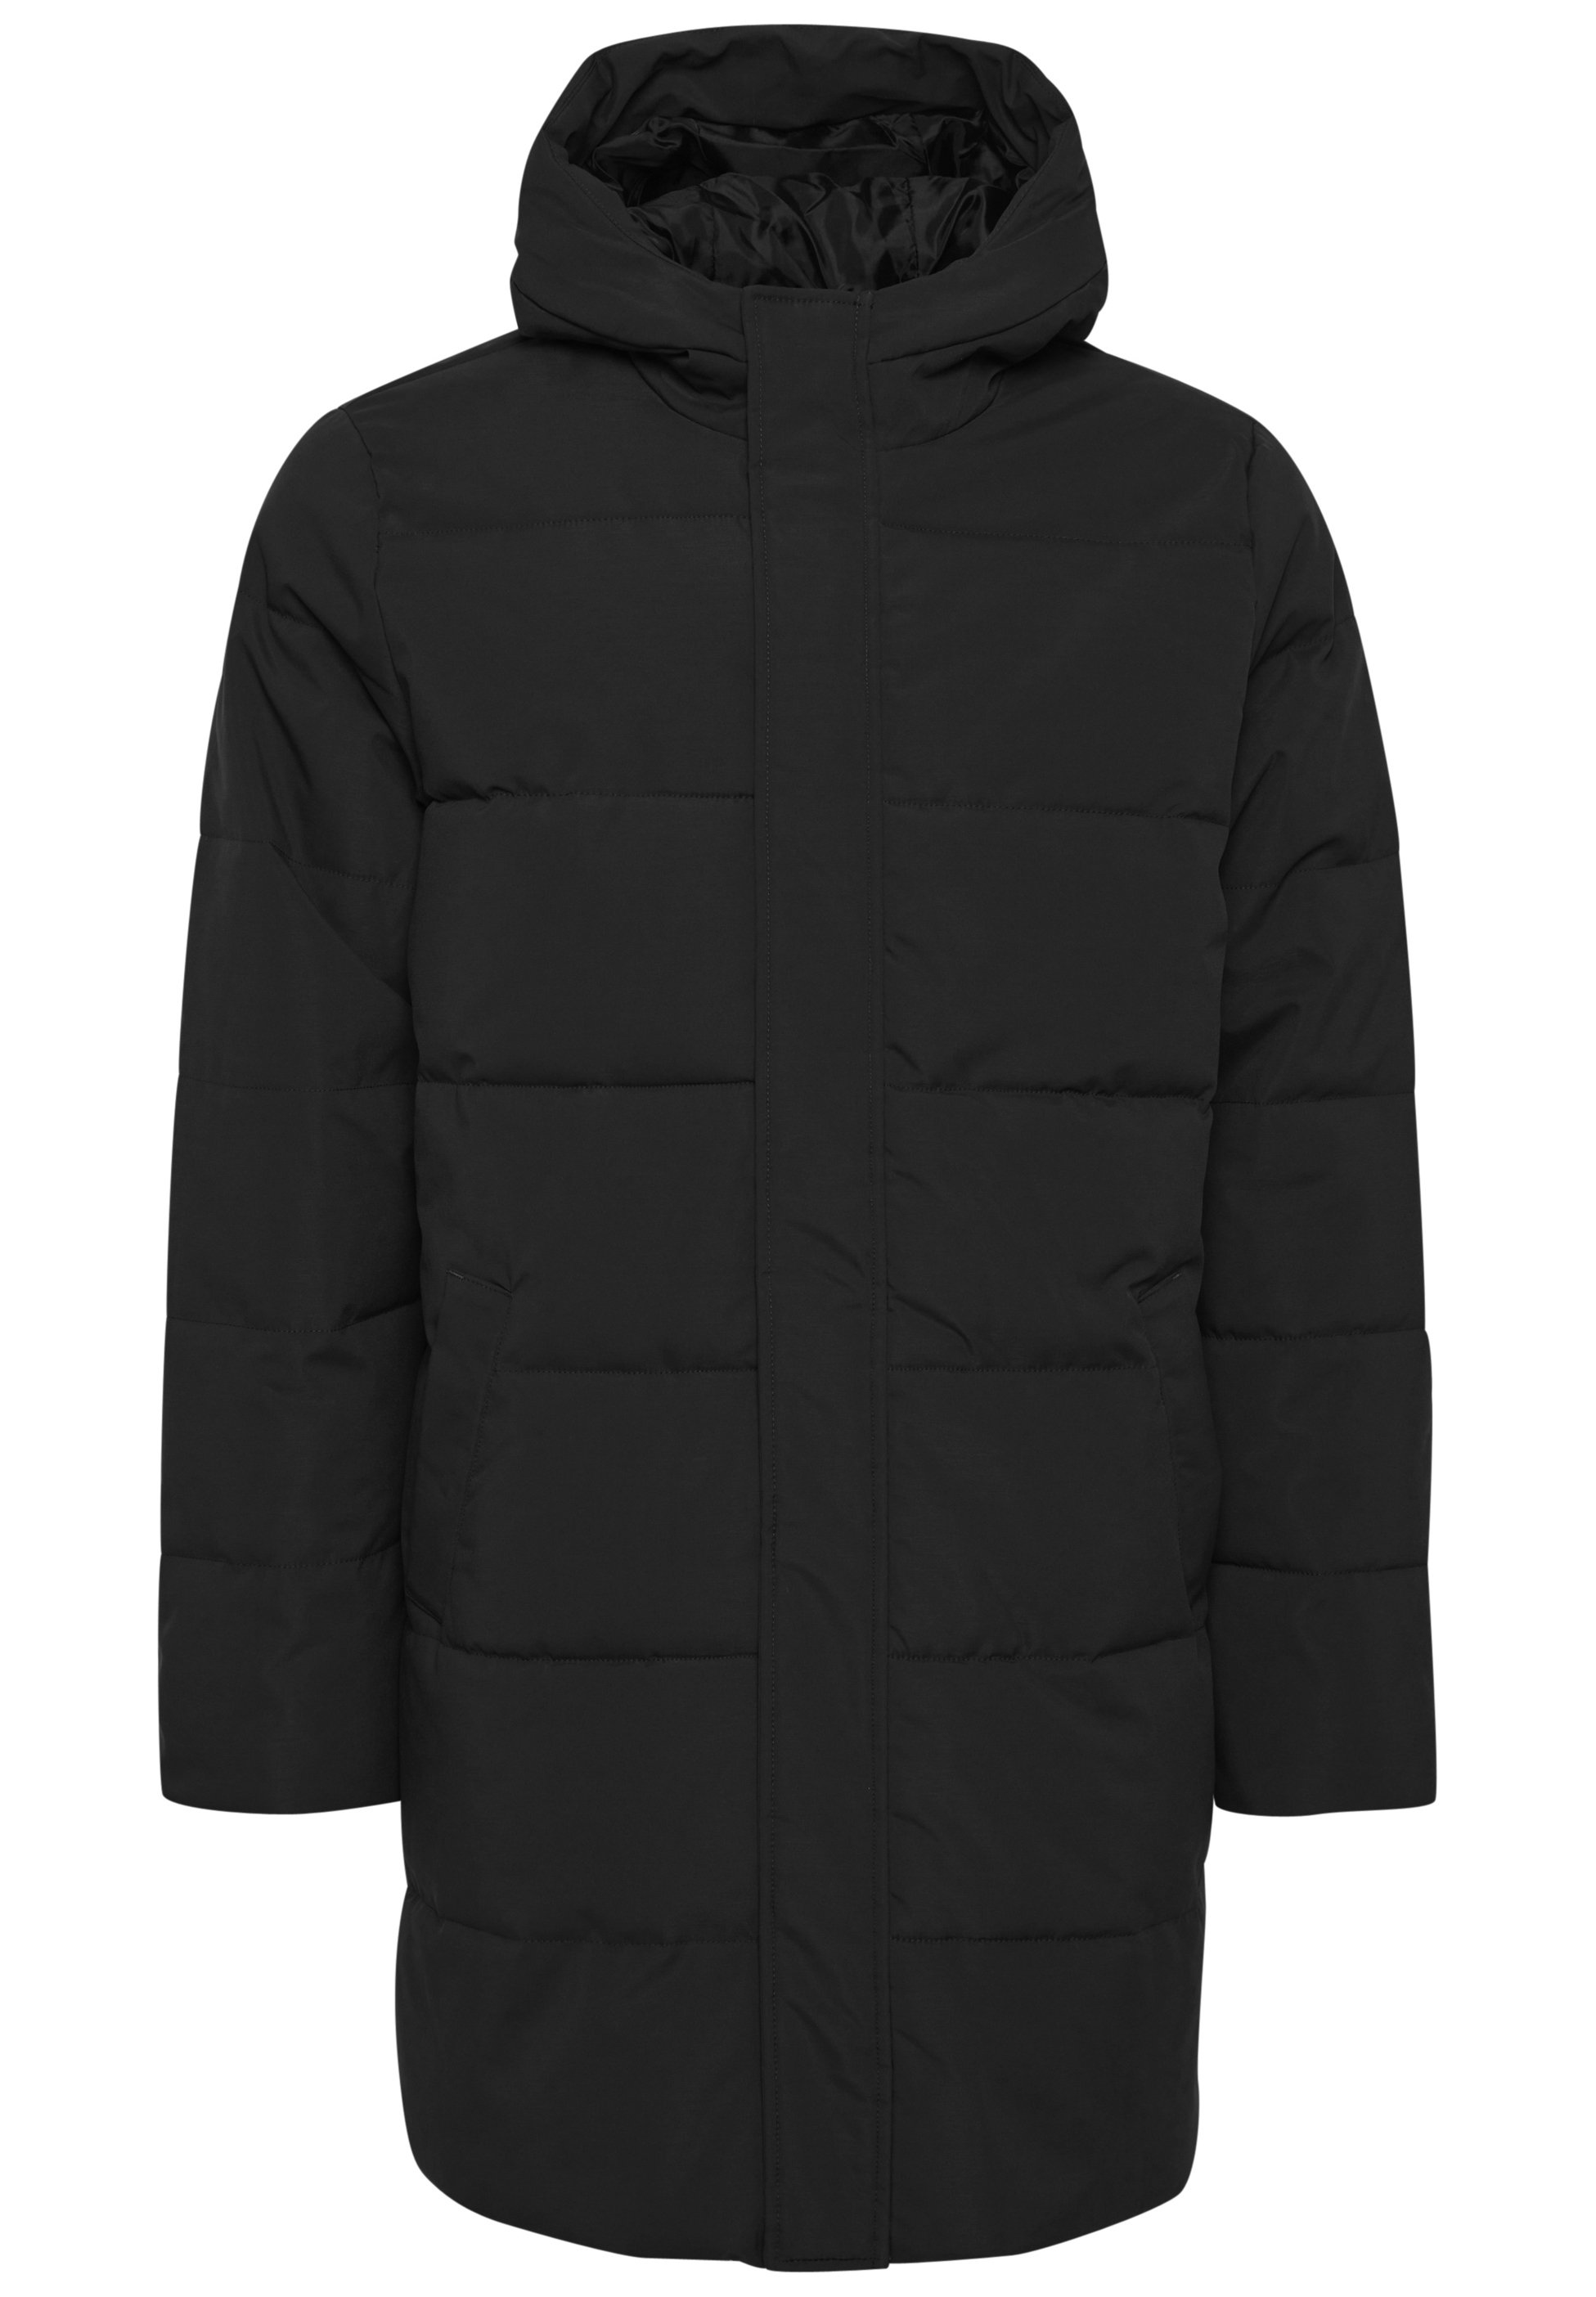 Пальто зимнее 11 Project на подкладке, черный пальто зимнее 11 project серый